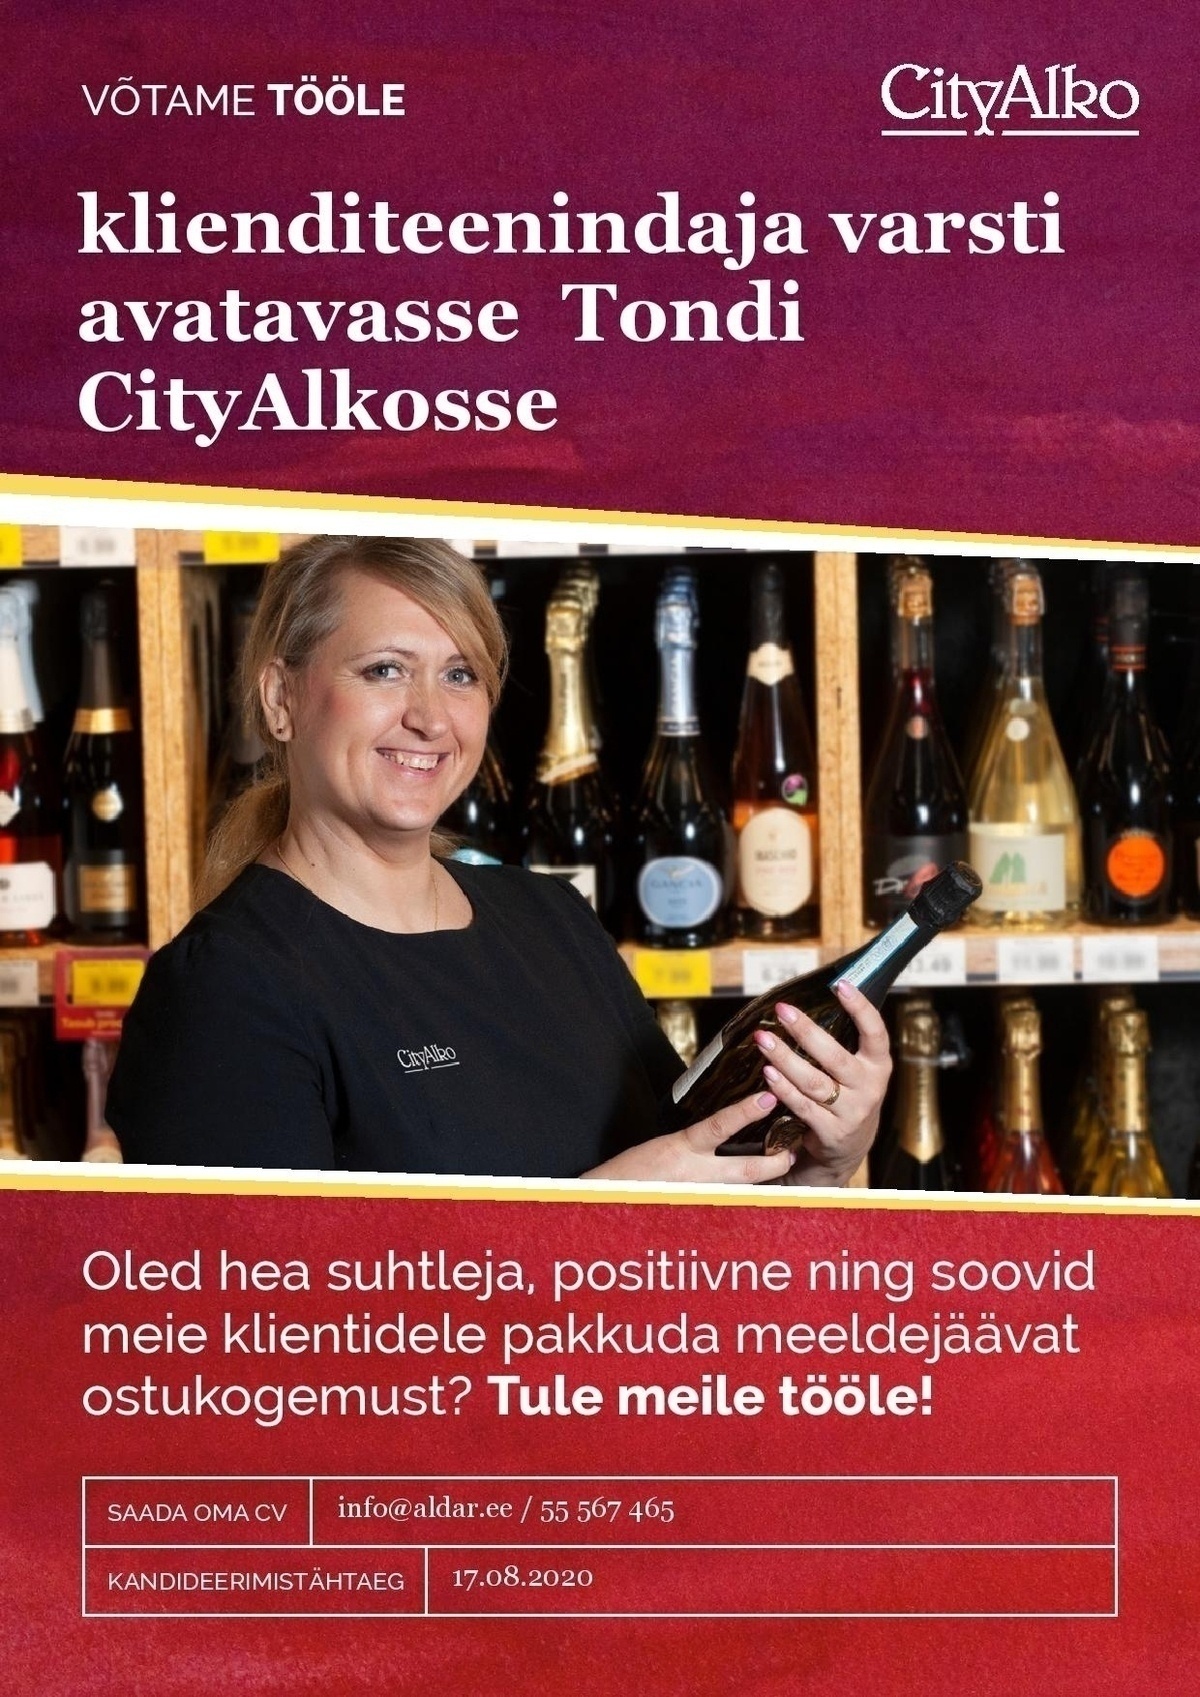 OÜ Aldar Eesti Klienditeenindaja Tondi CityAlkosse